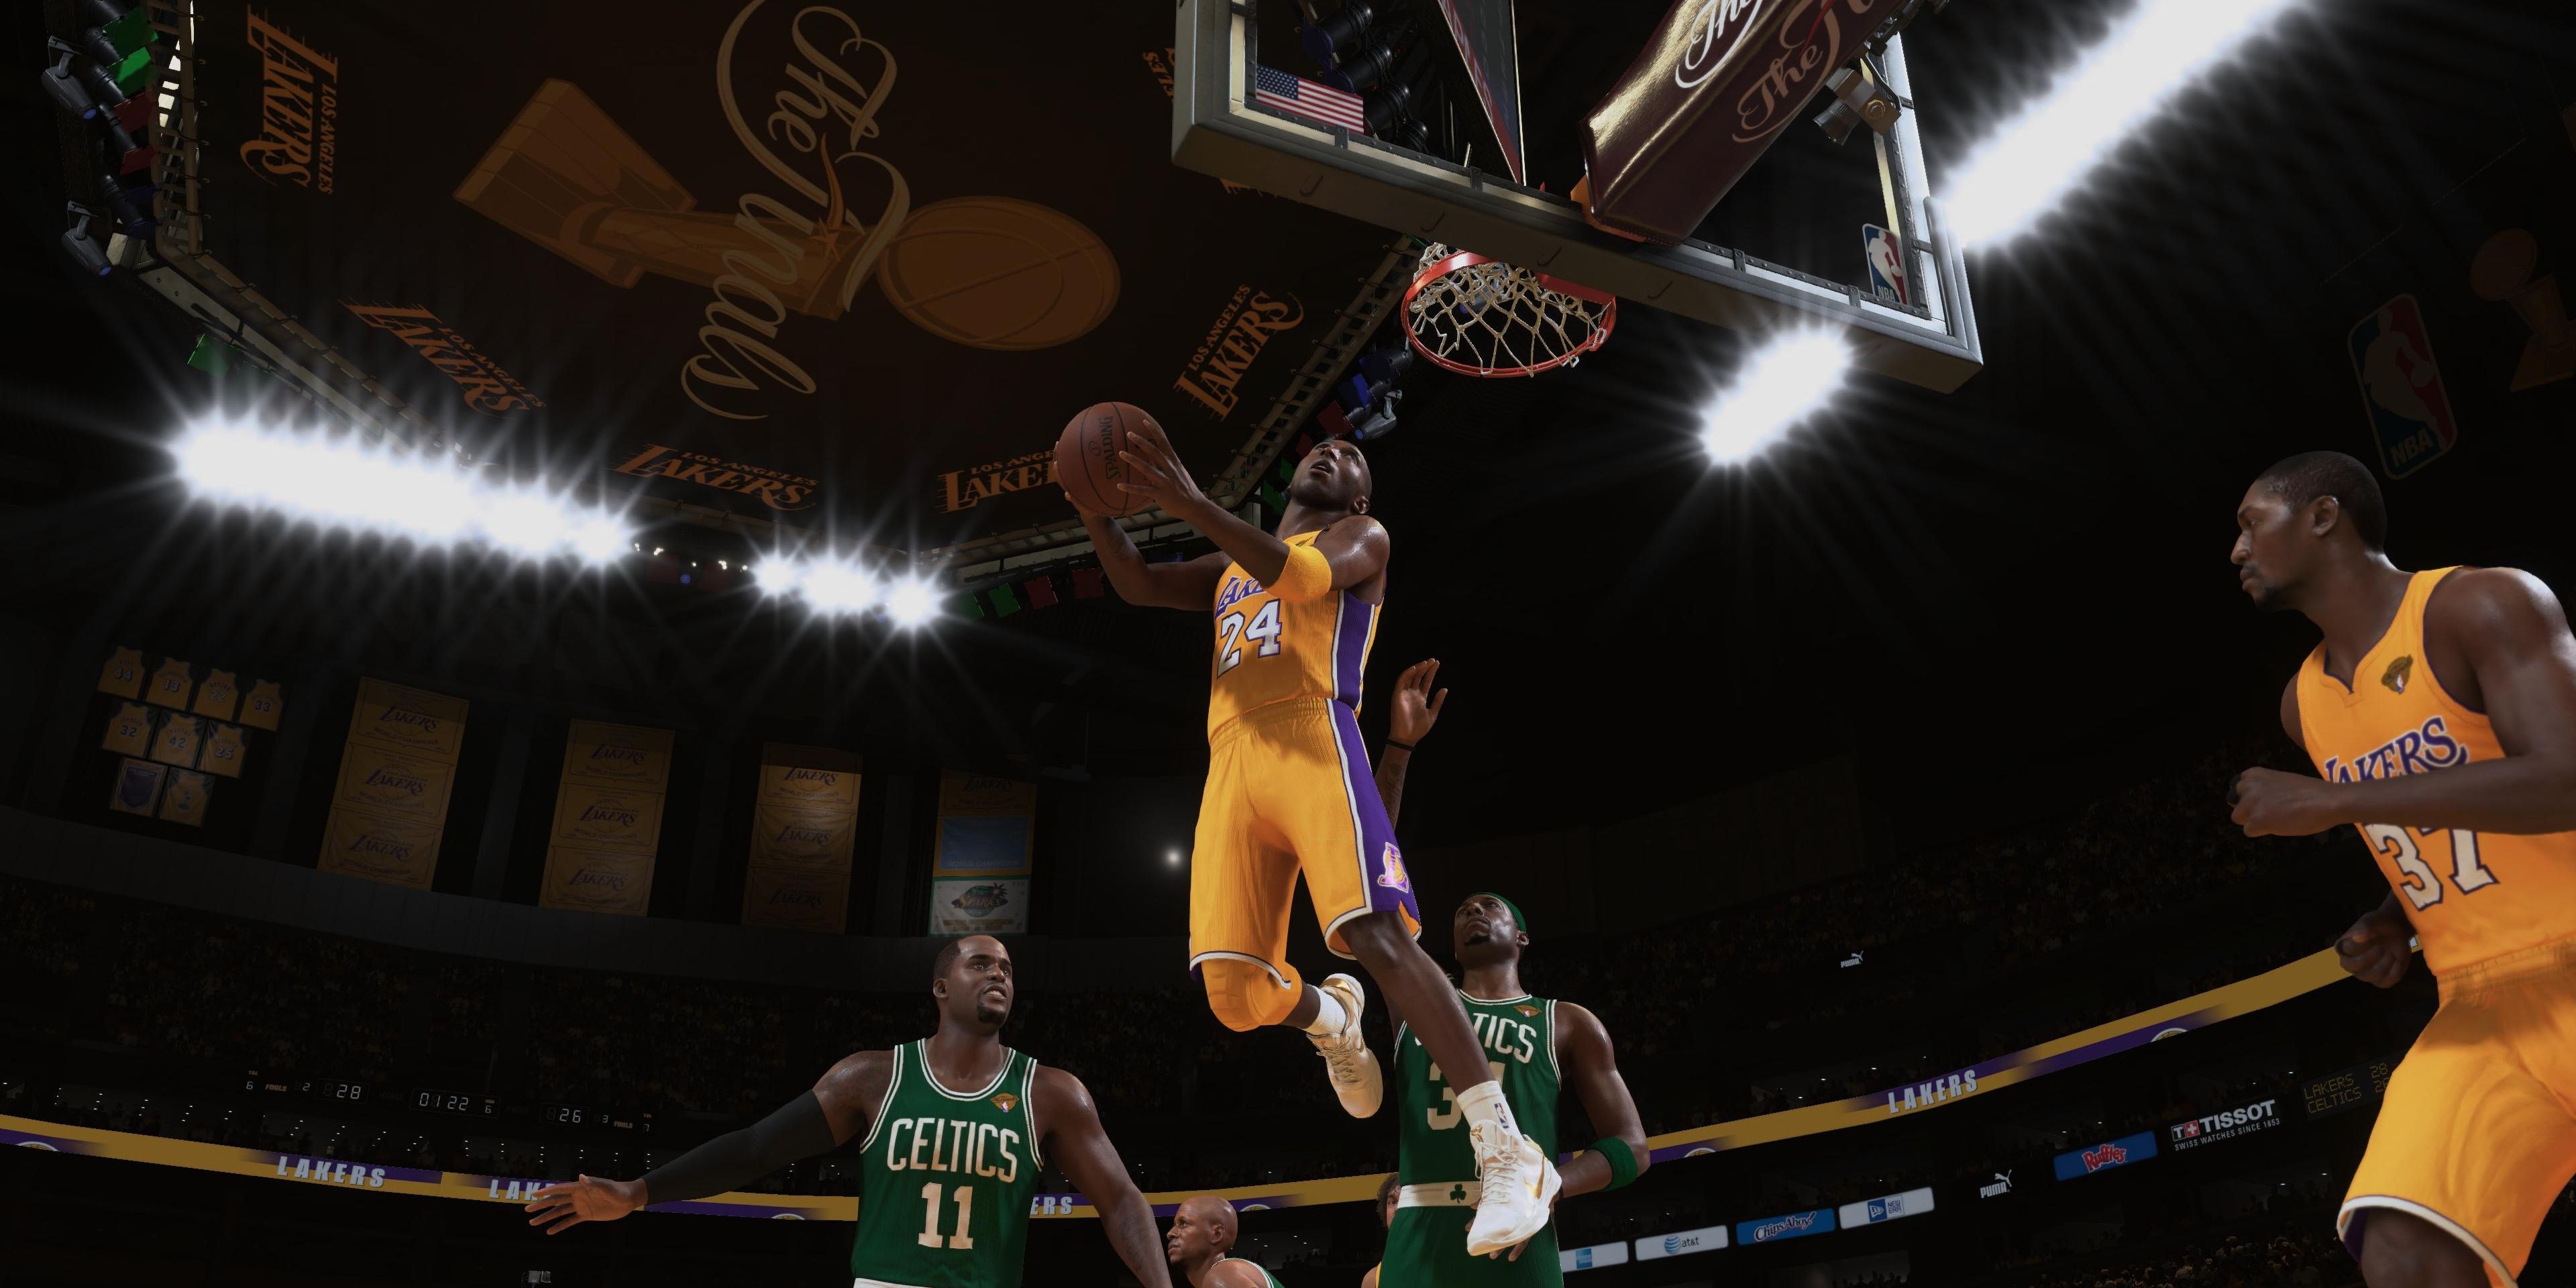 Kobe Bryant dunking on the Celtics